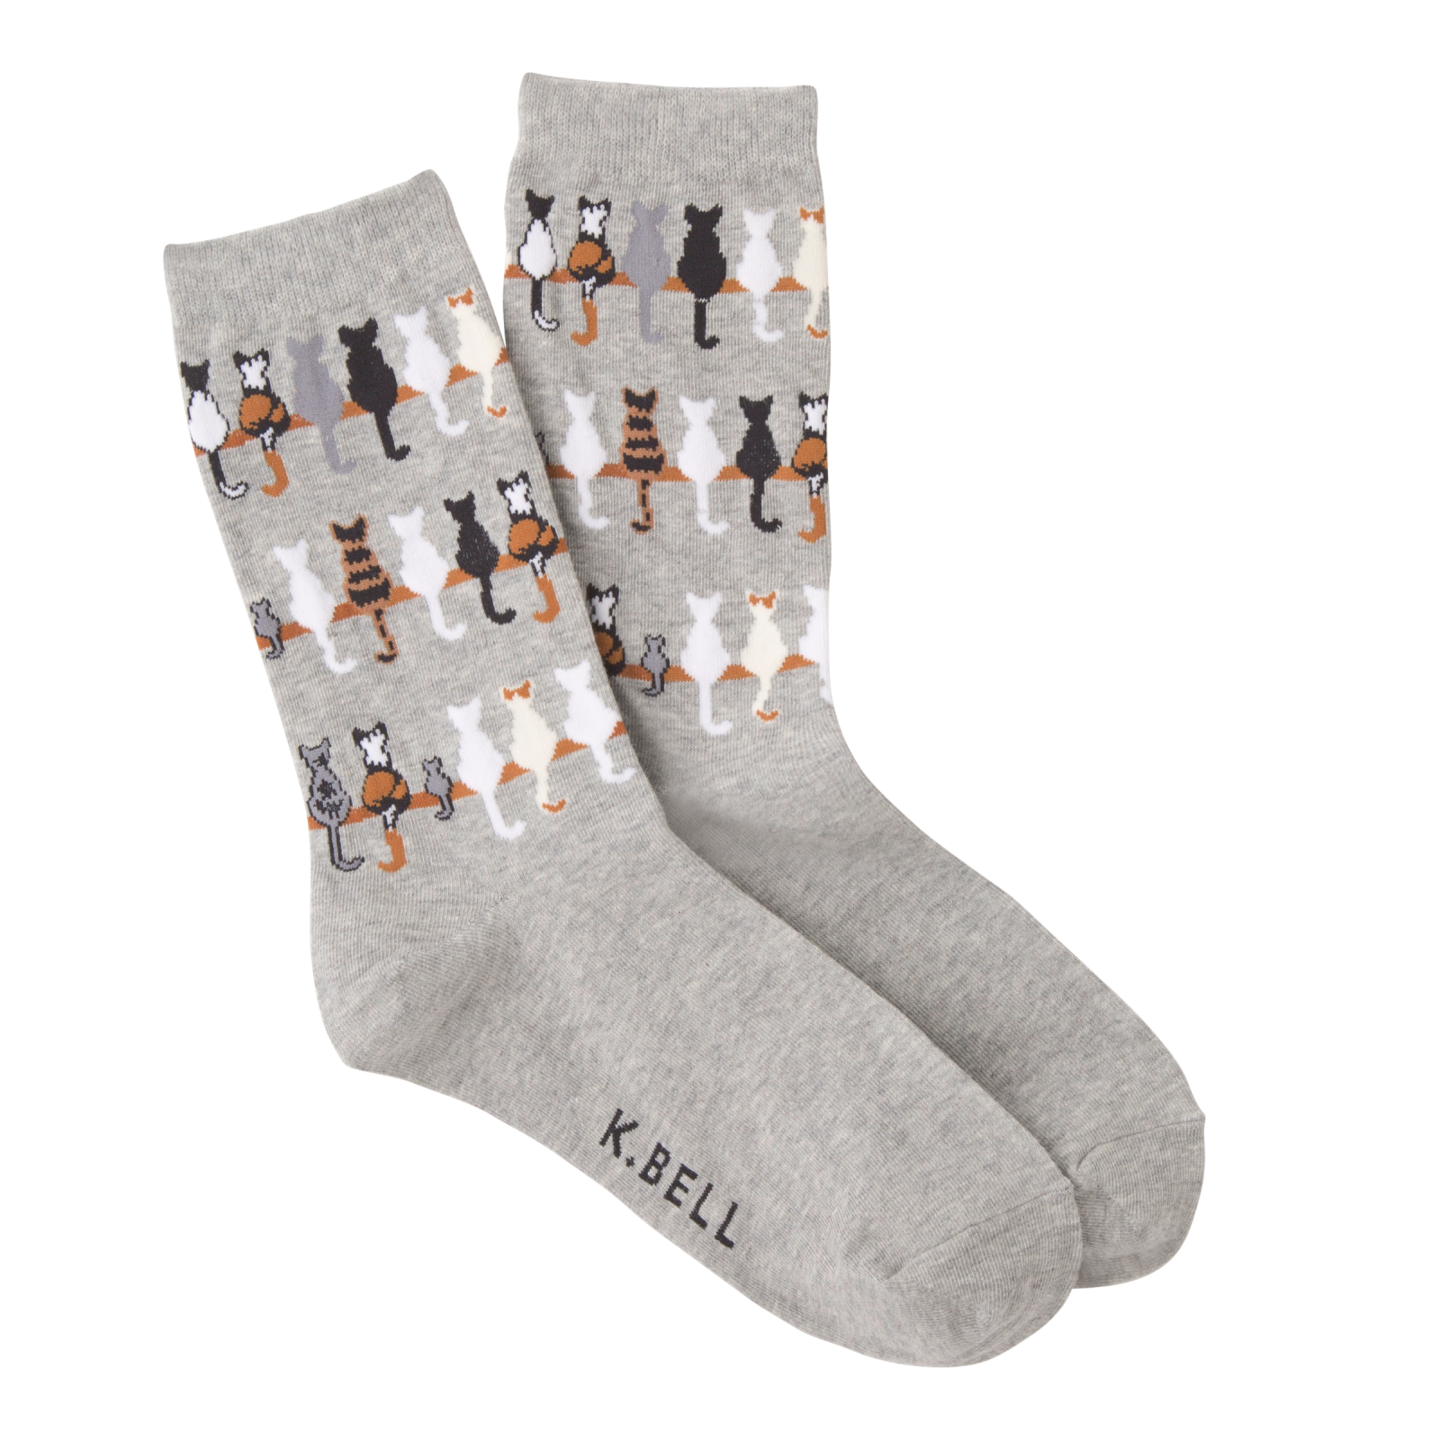 Cat Tails crew socks